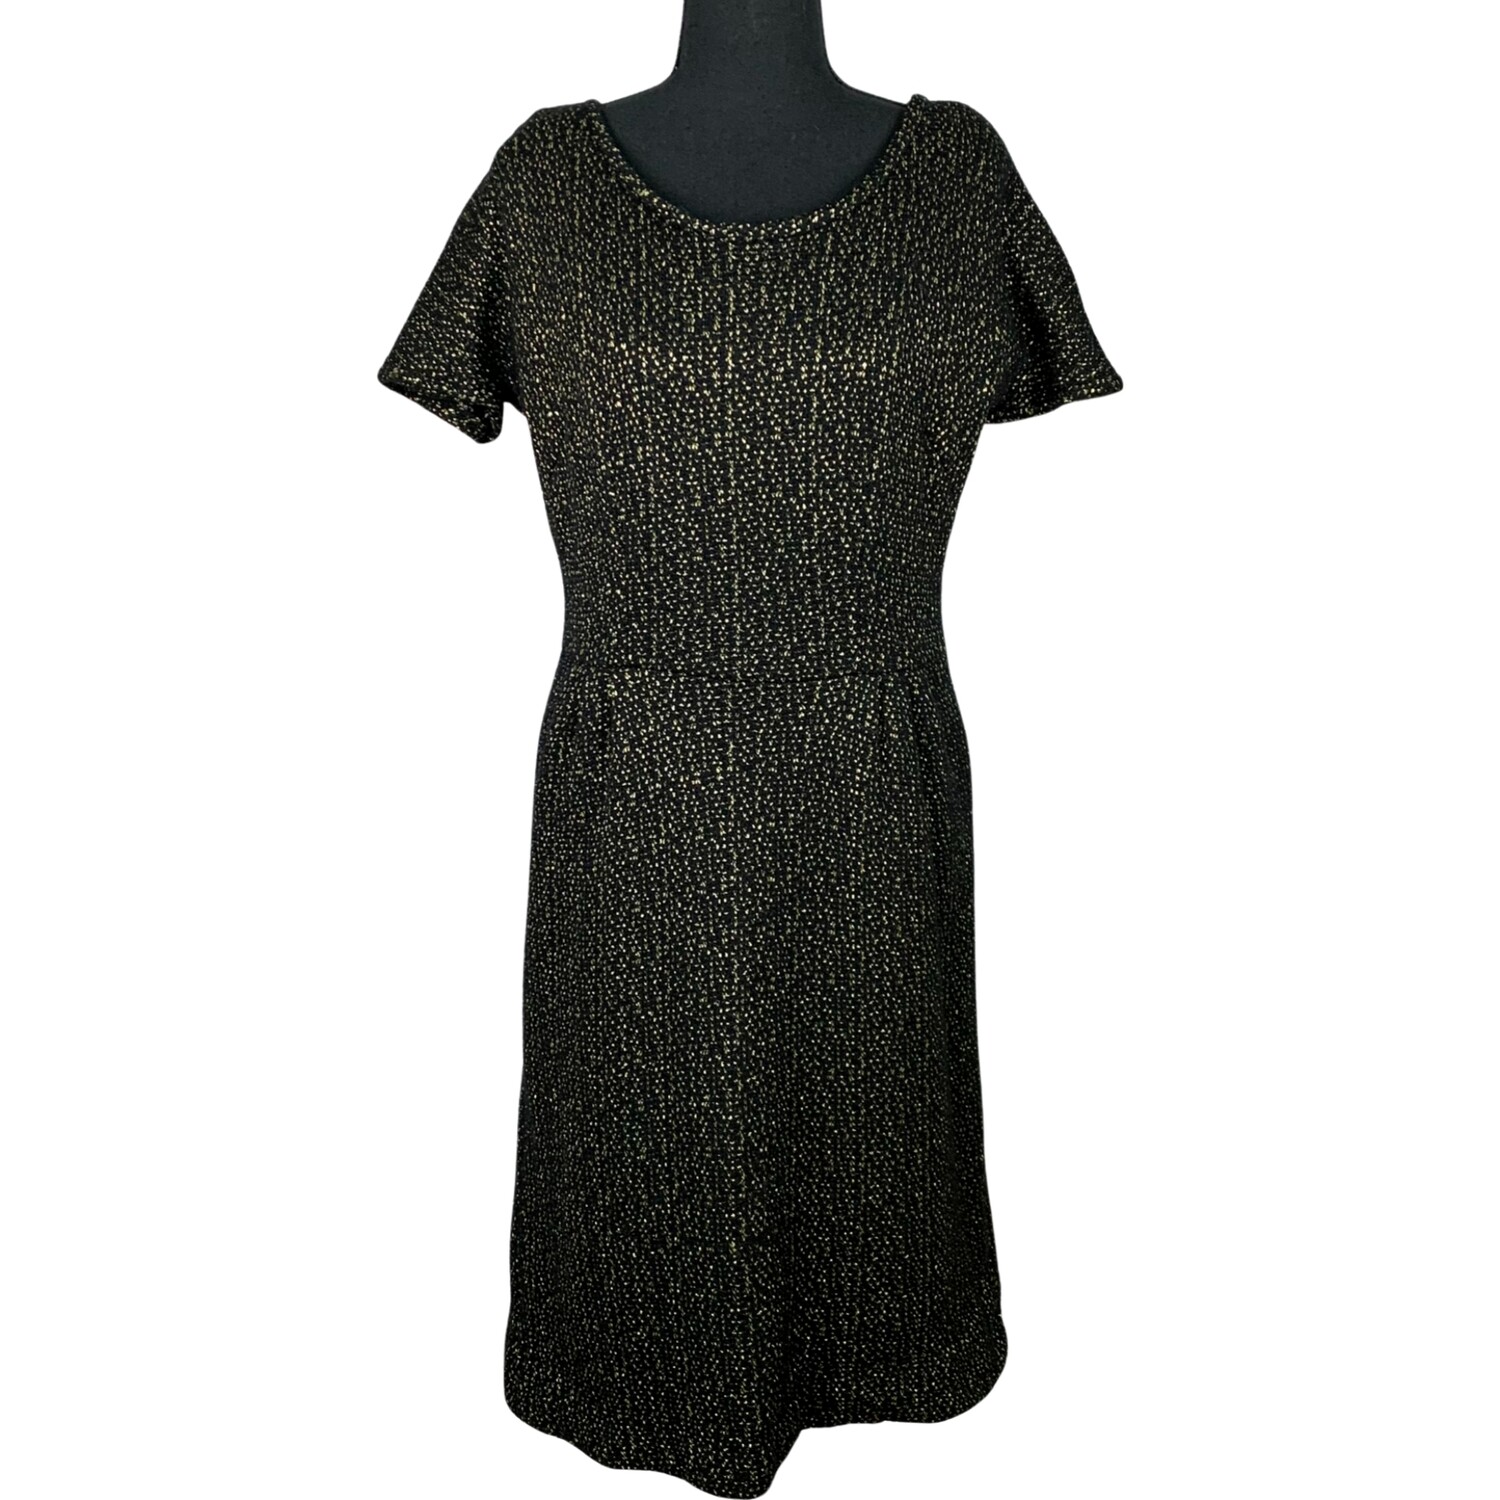 Vintage 60s Miss Berkeley Short Sleeve Tweed Mod Shift Dress